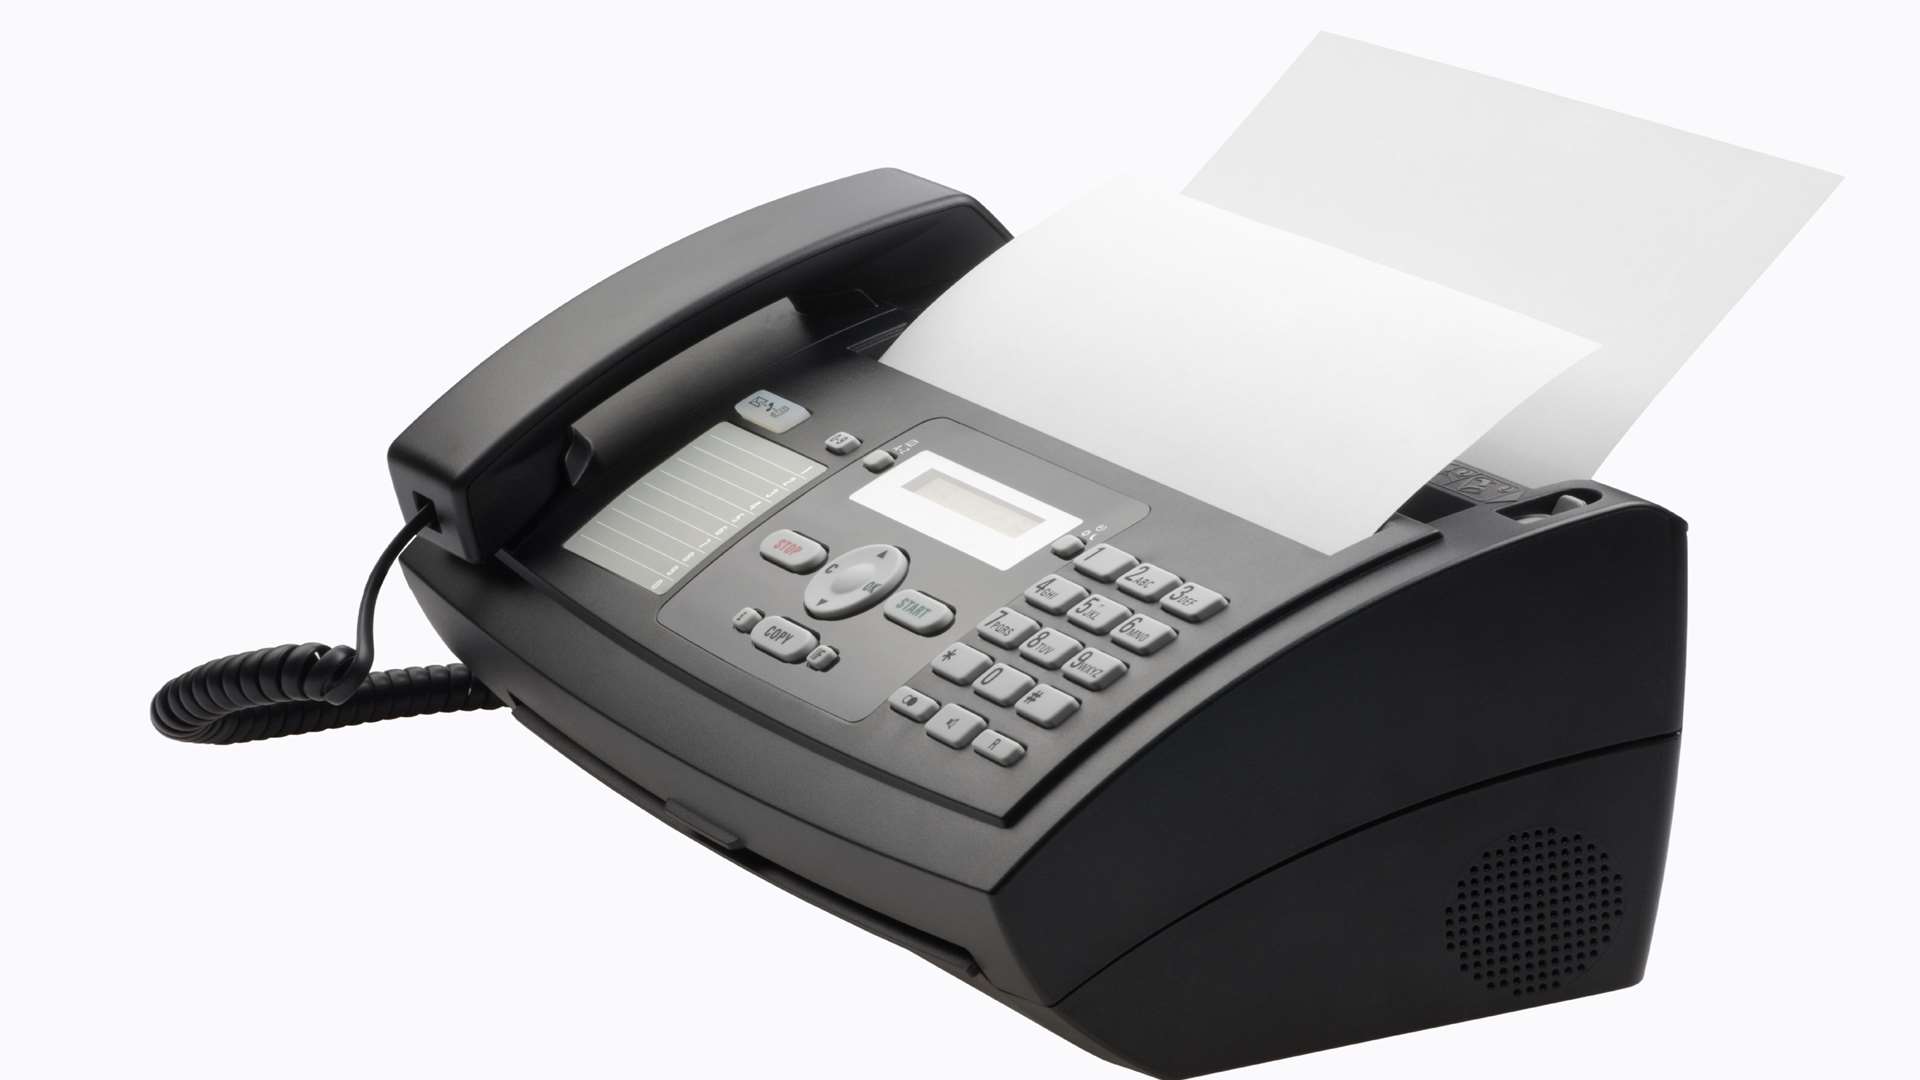 Fax machine? What's that?